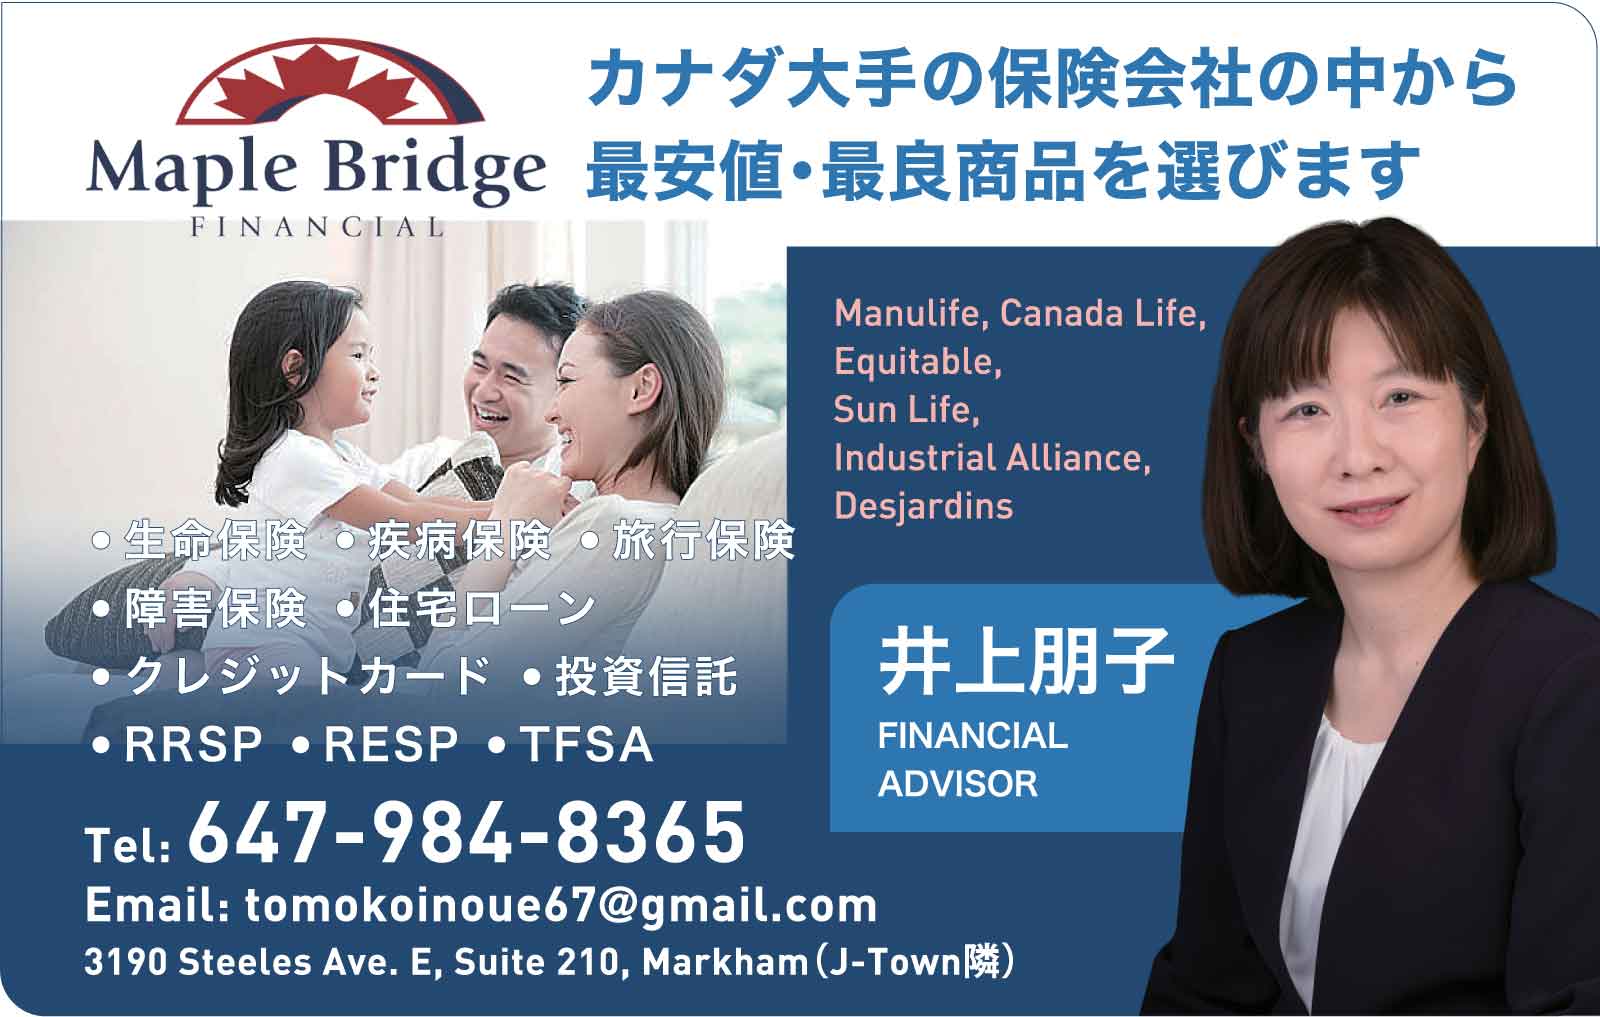 Maple Bridge